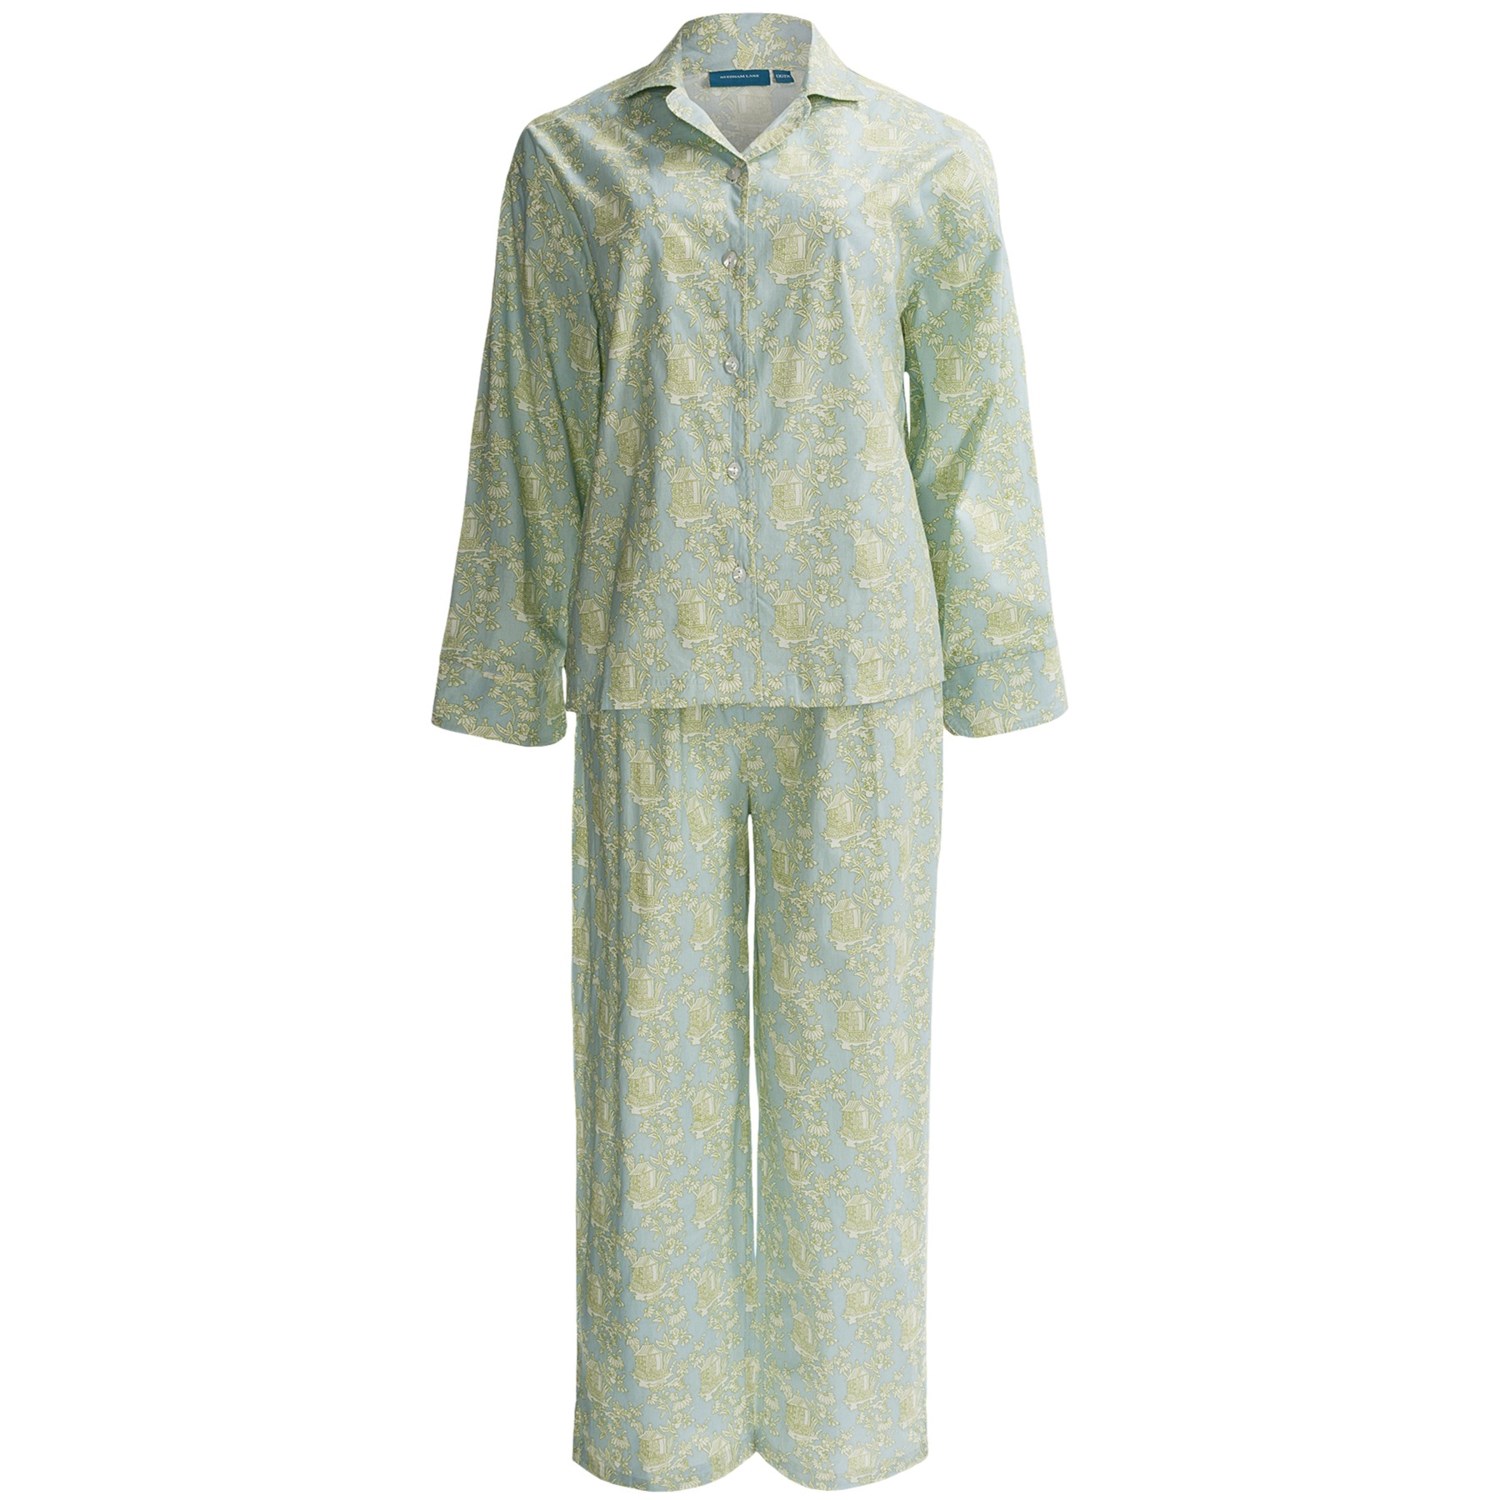 Needham Lane Cotton Pajamas - Long Sleeve (For Plus Size Women) - Save 47%